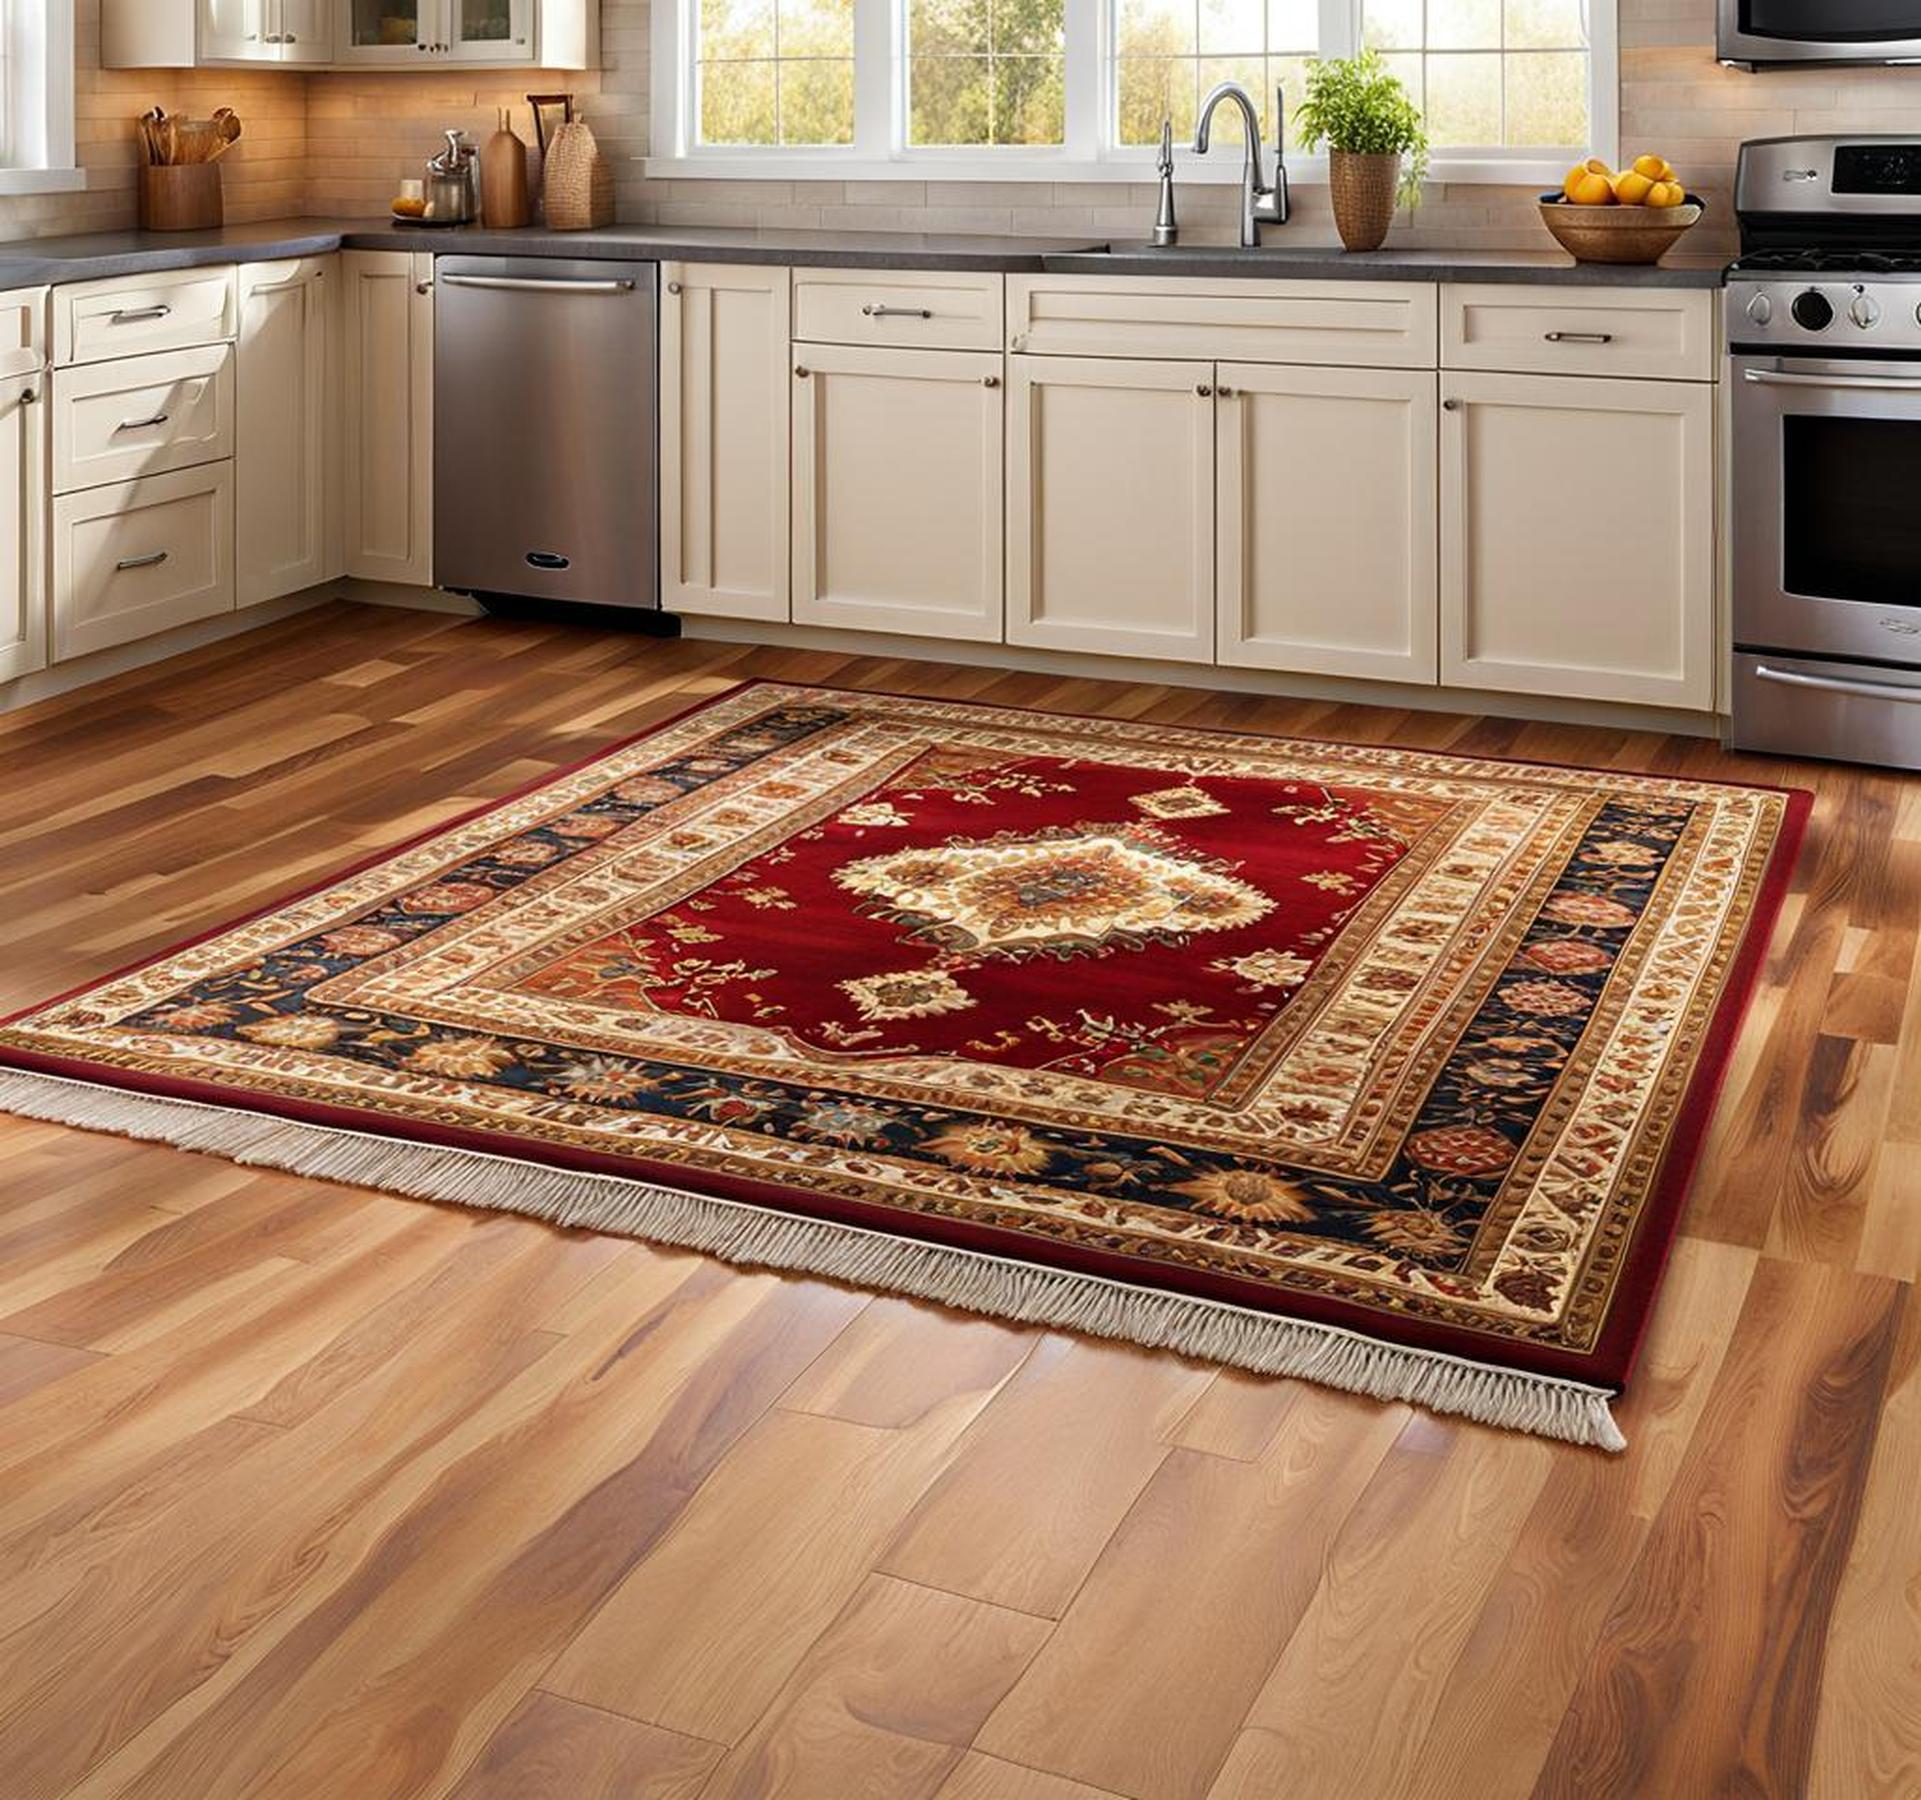 rugs for hardwood floors in kitchen